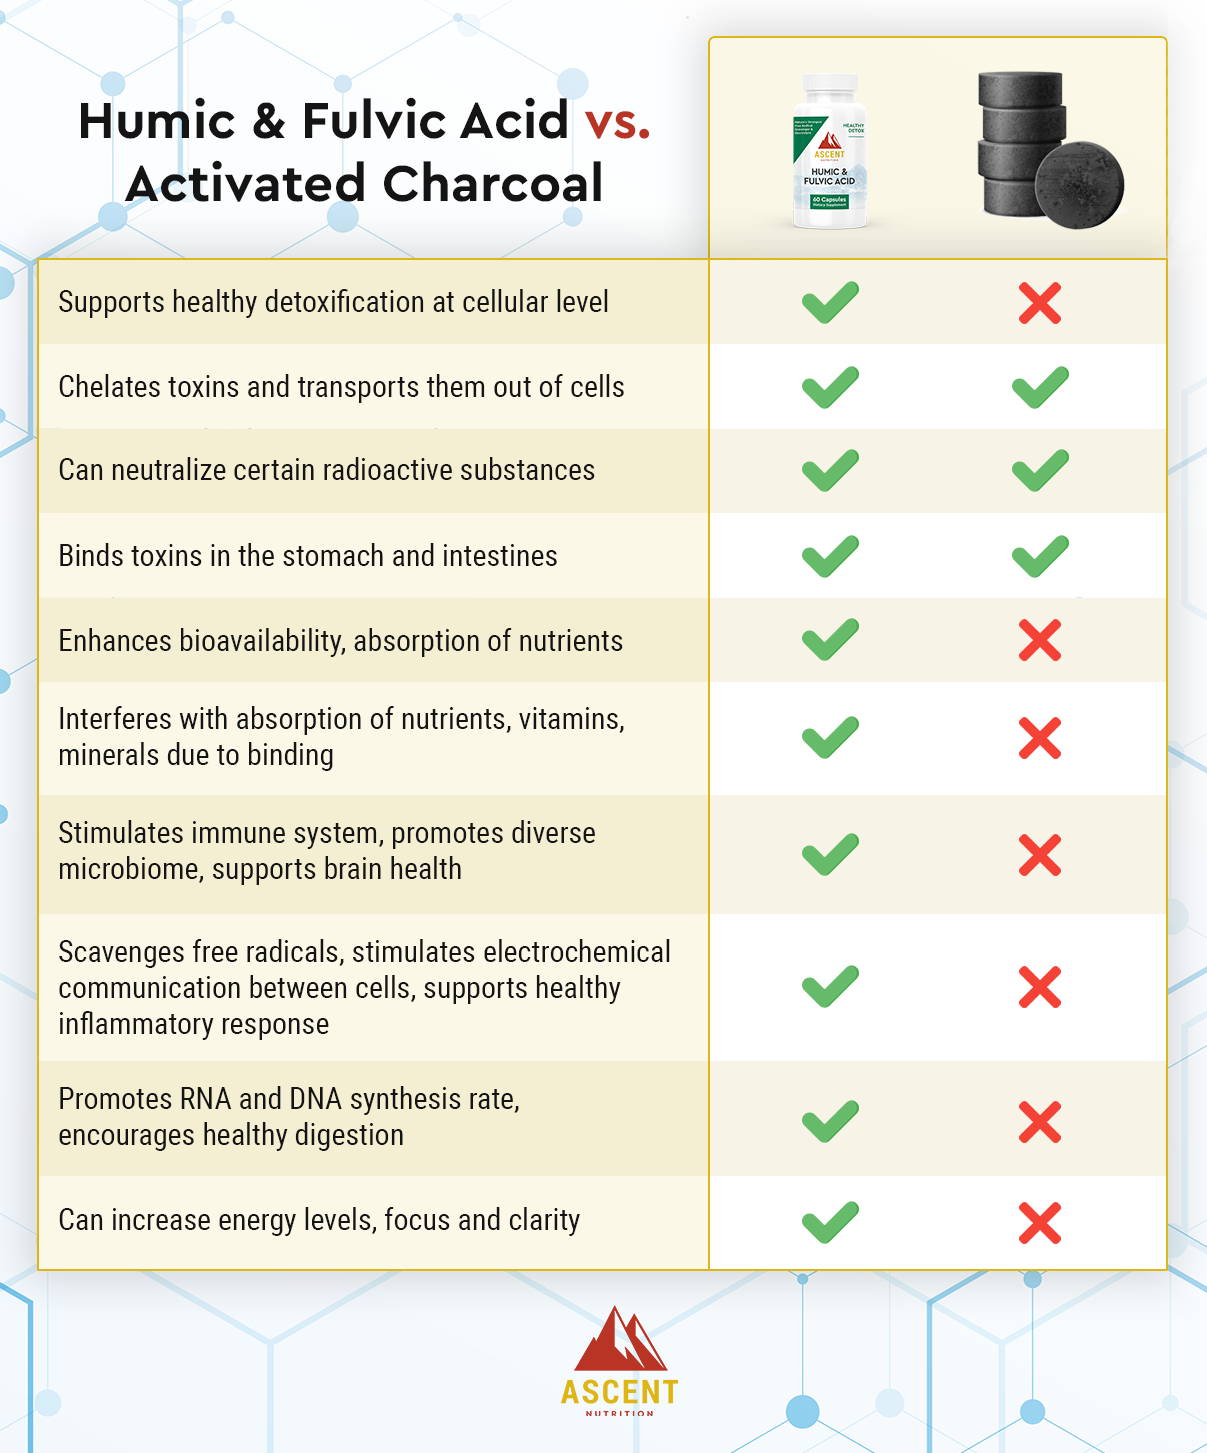 Humic & Fulvic Acid vs Activated Charcoal